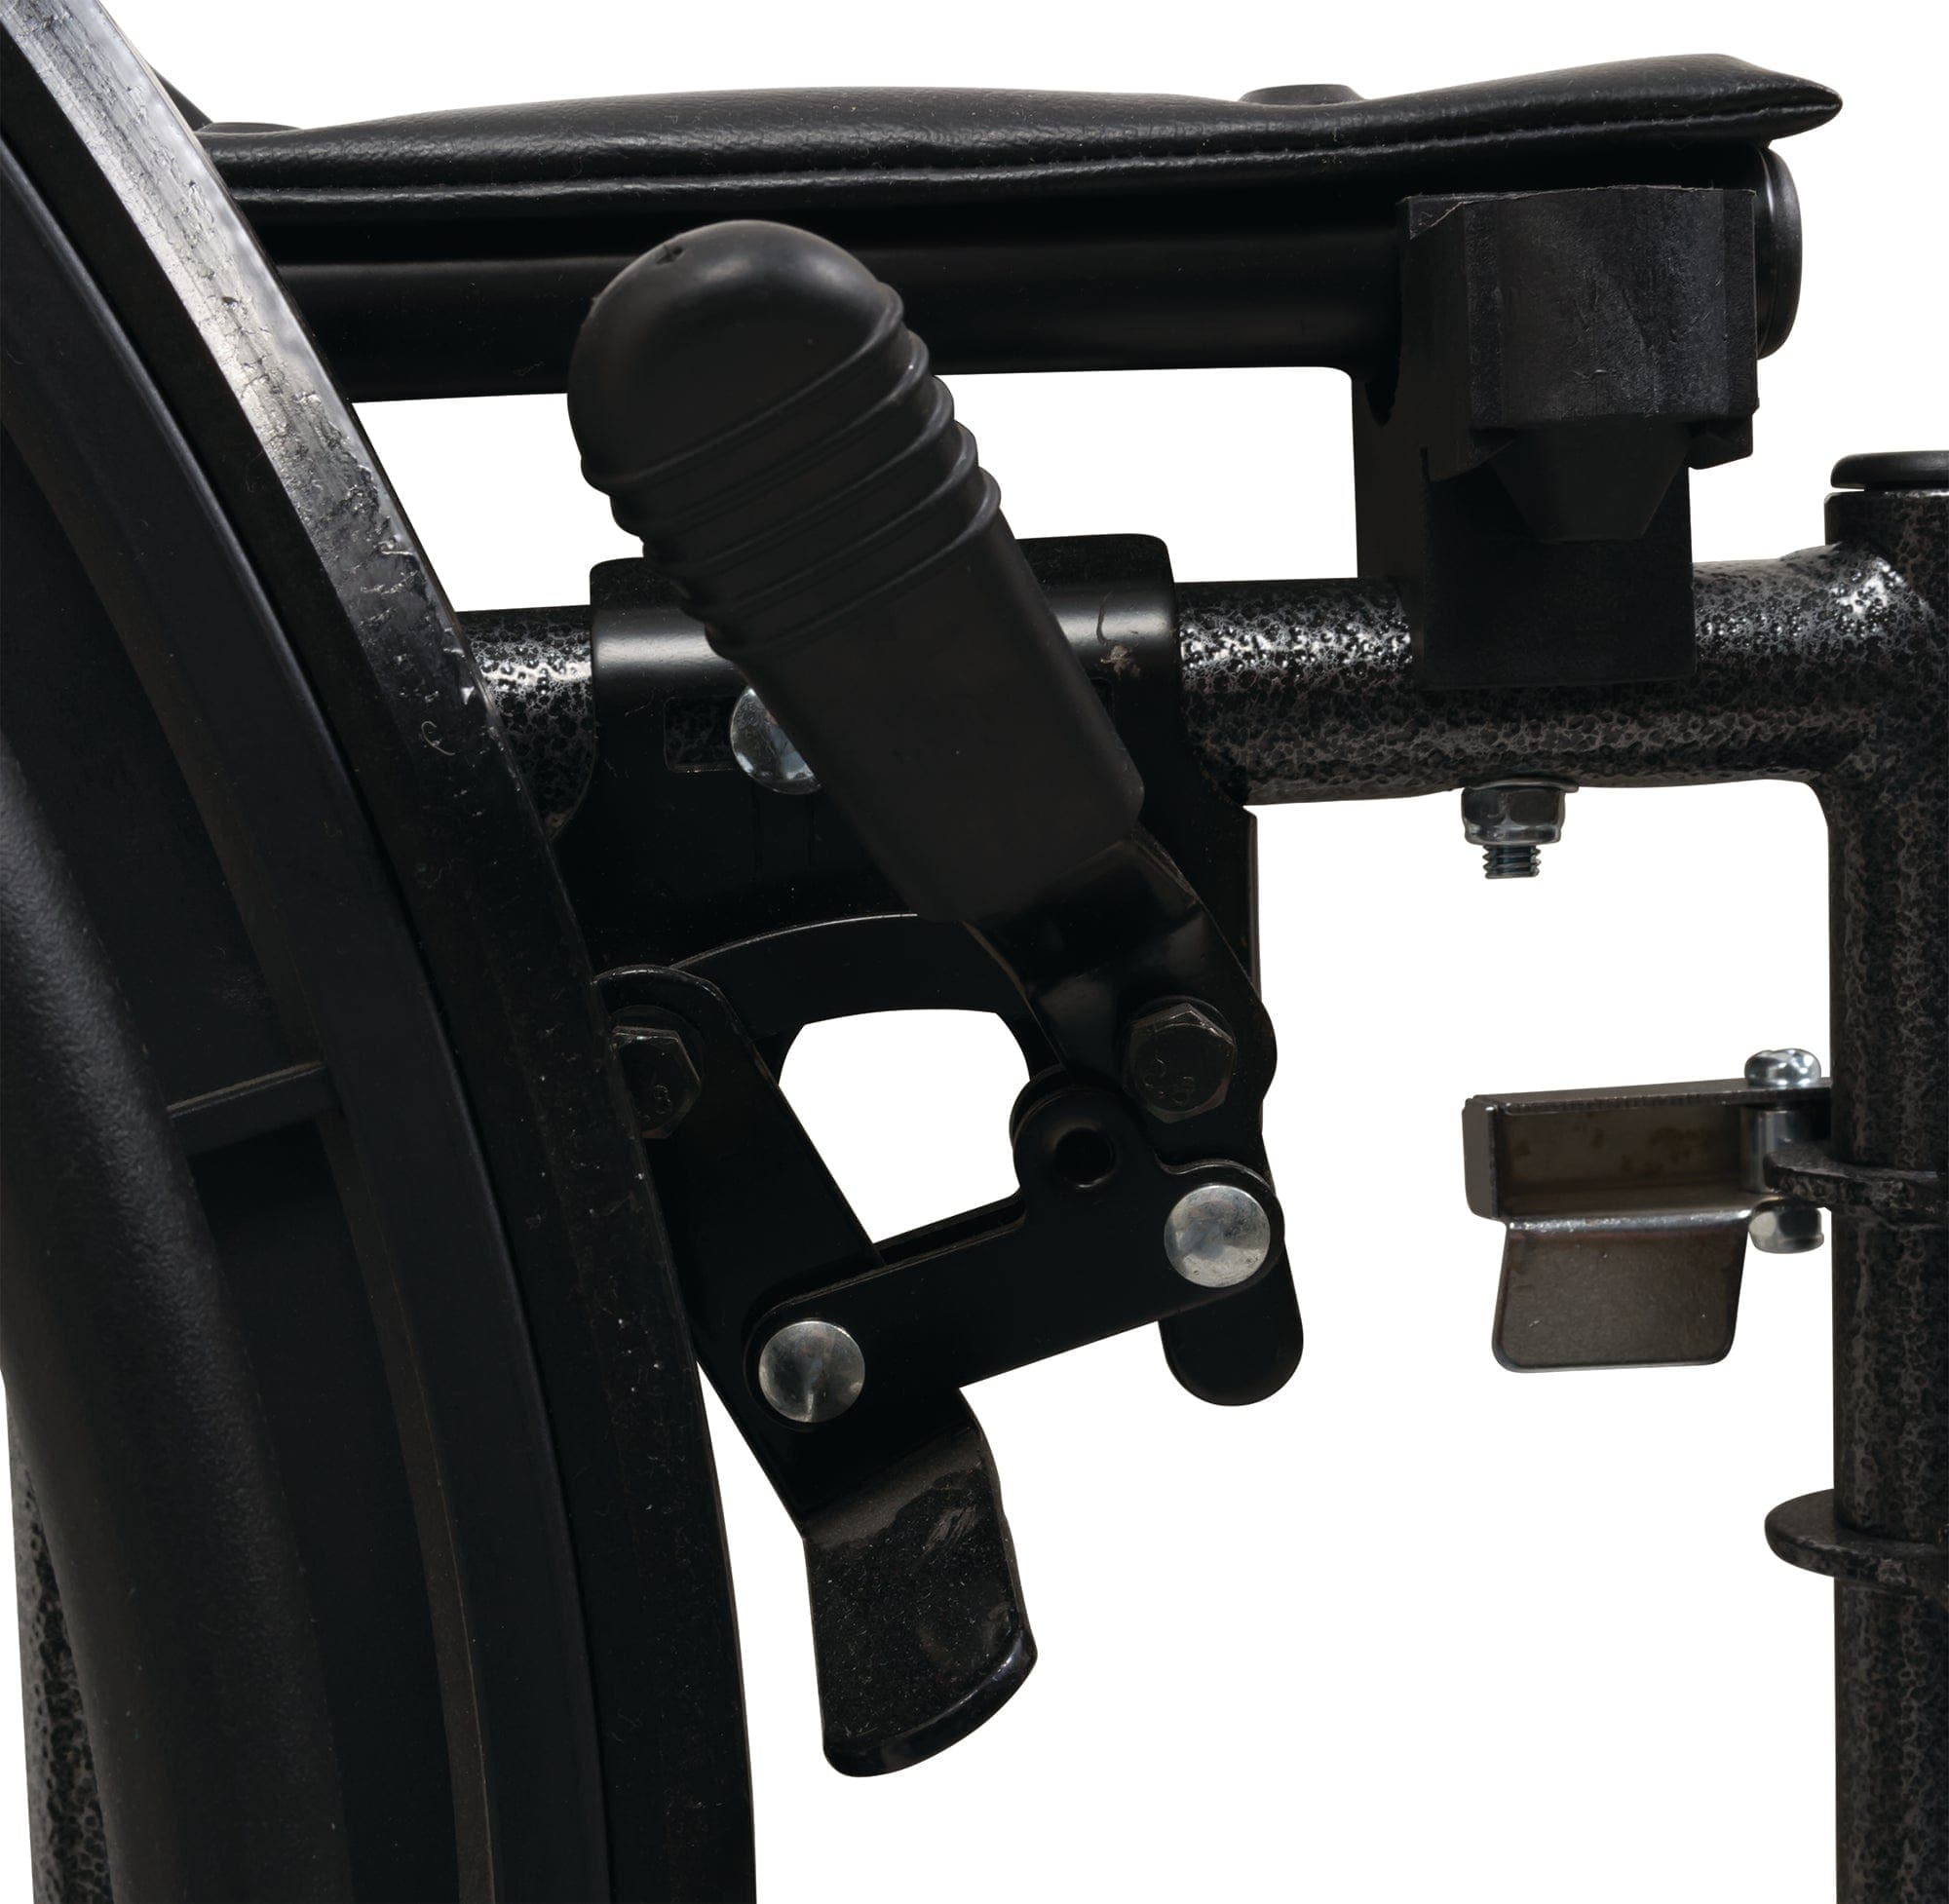 Compass Health K3 Wheelchairs Compass Health ProBasics K3 Lightweight Wheelchair with 18" x 16" Seat,